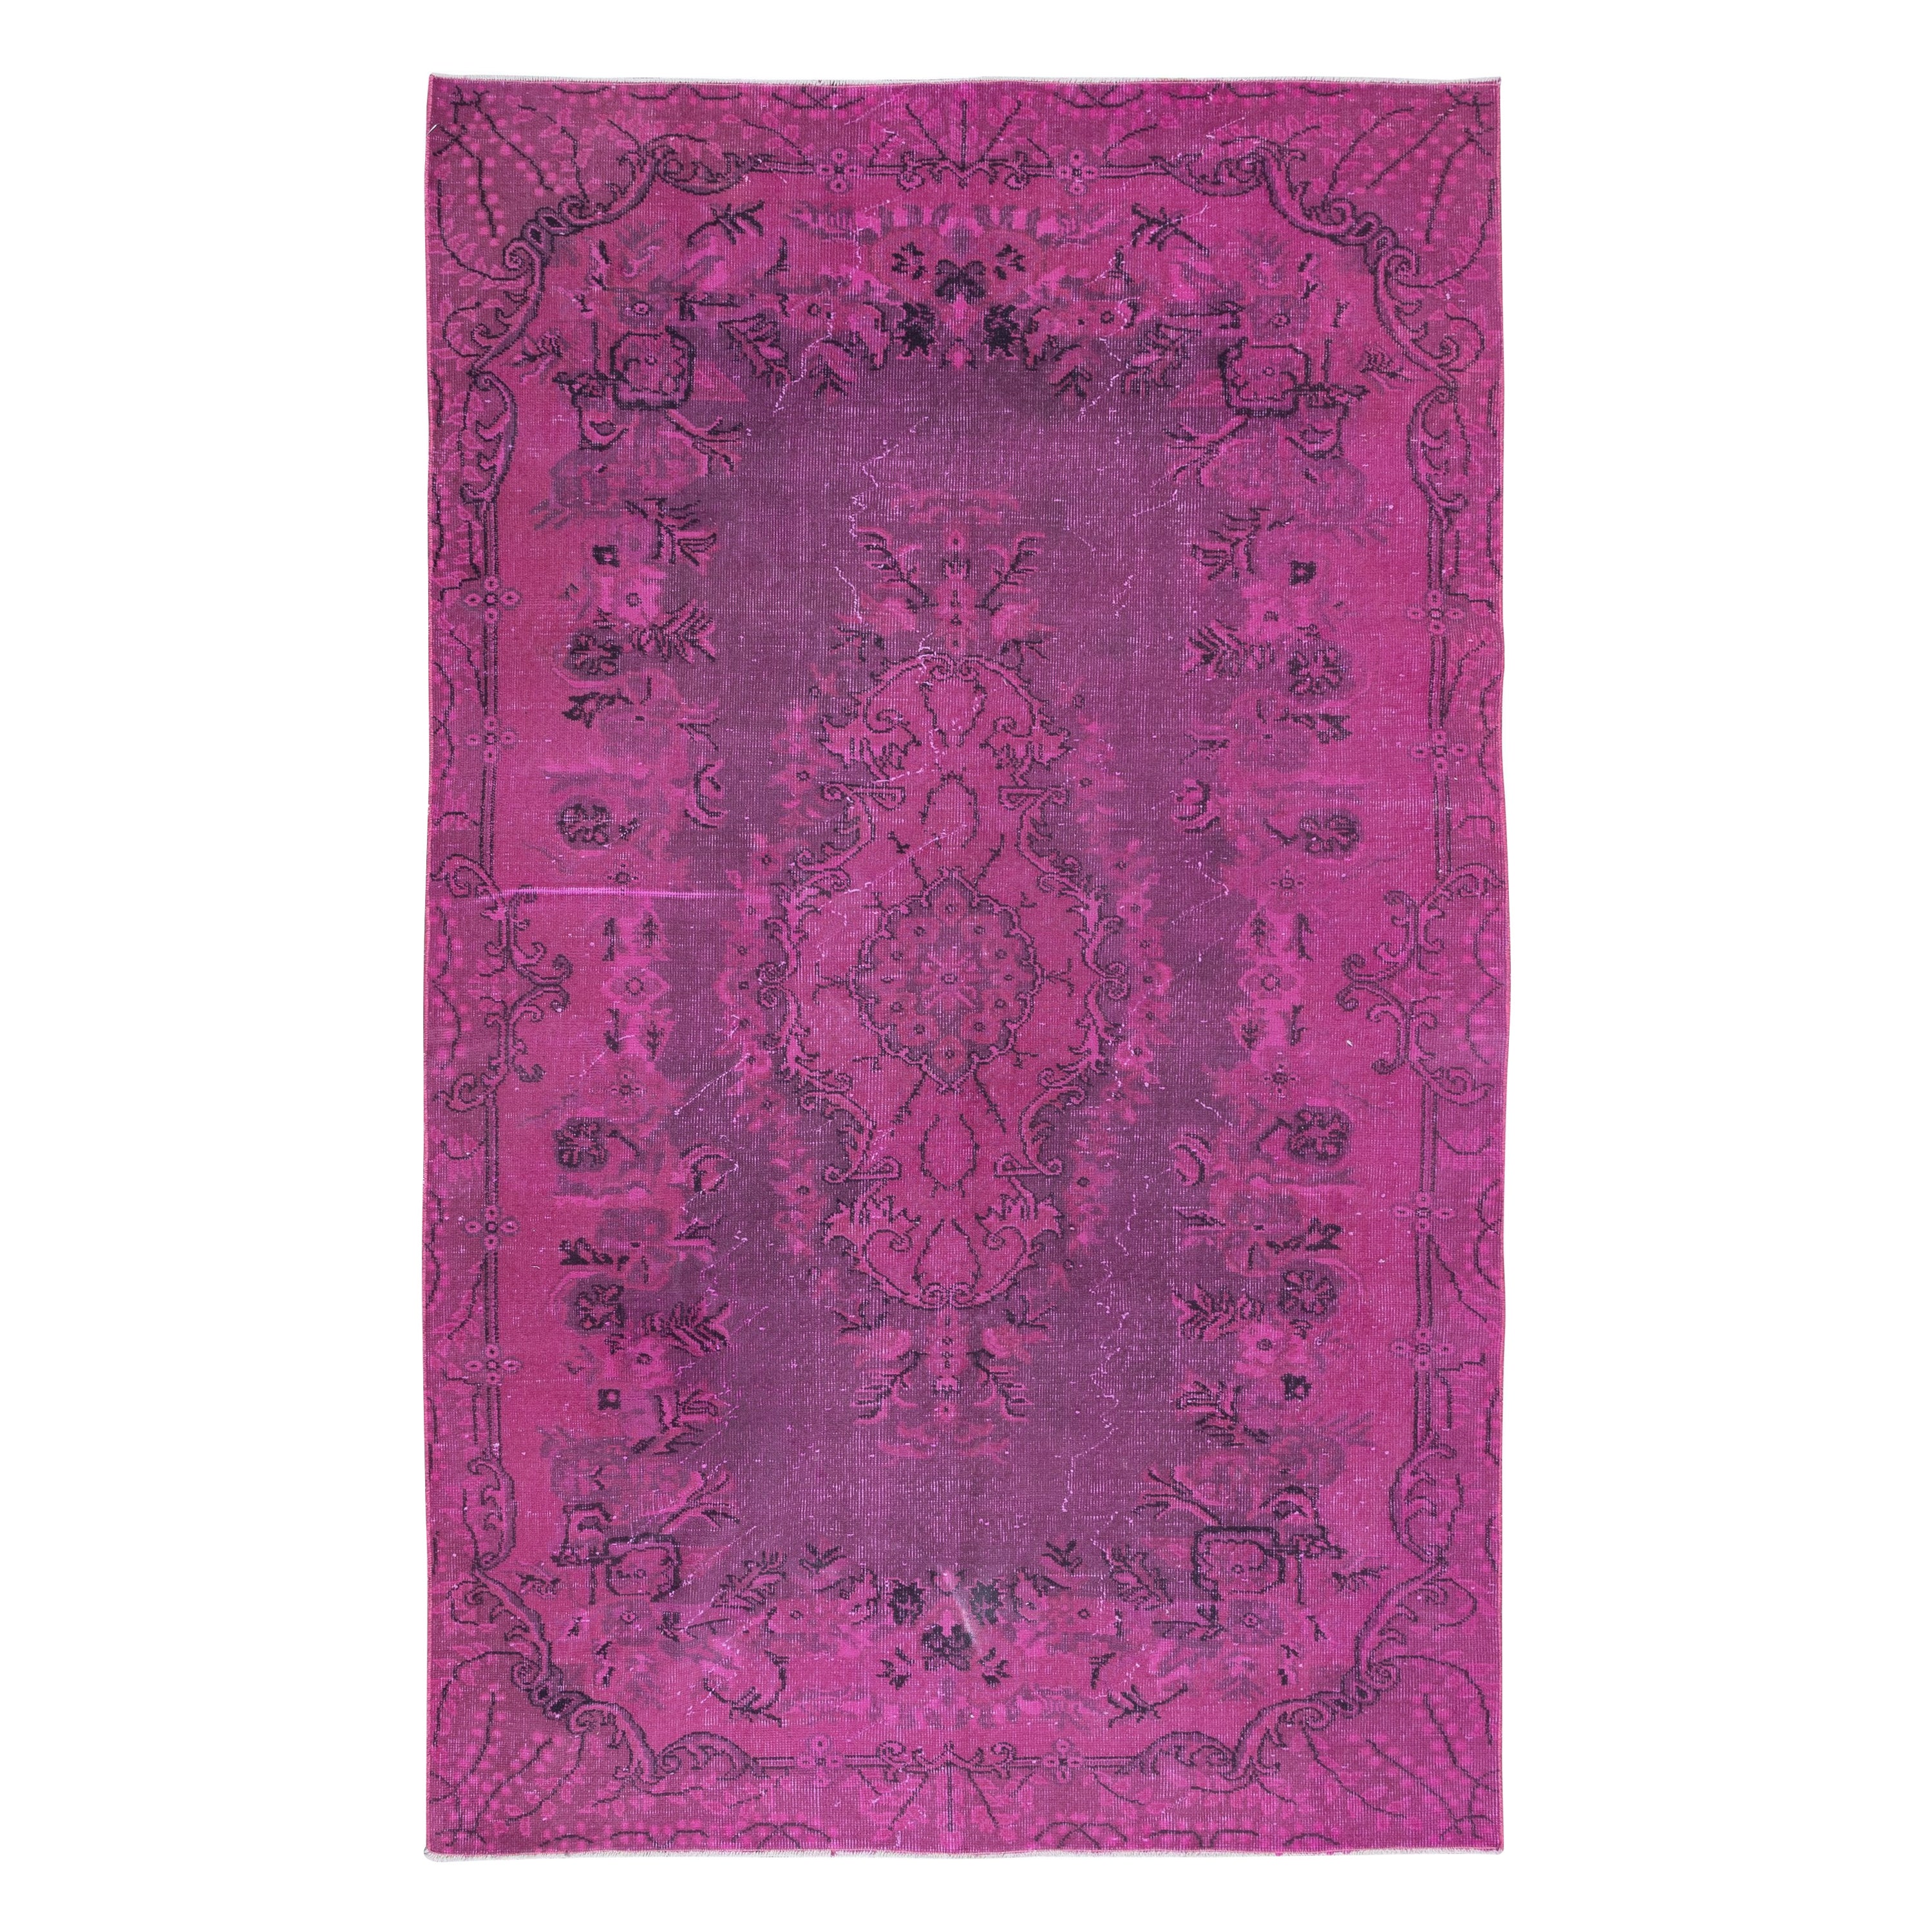 5.4x8.7 Ft Pink Handmade Modern Rug, Turkish Living Room Carpet with Medallion For Sale